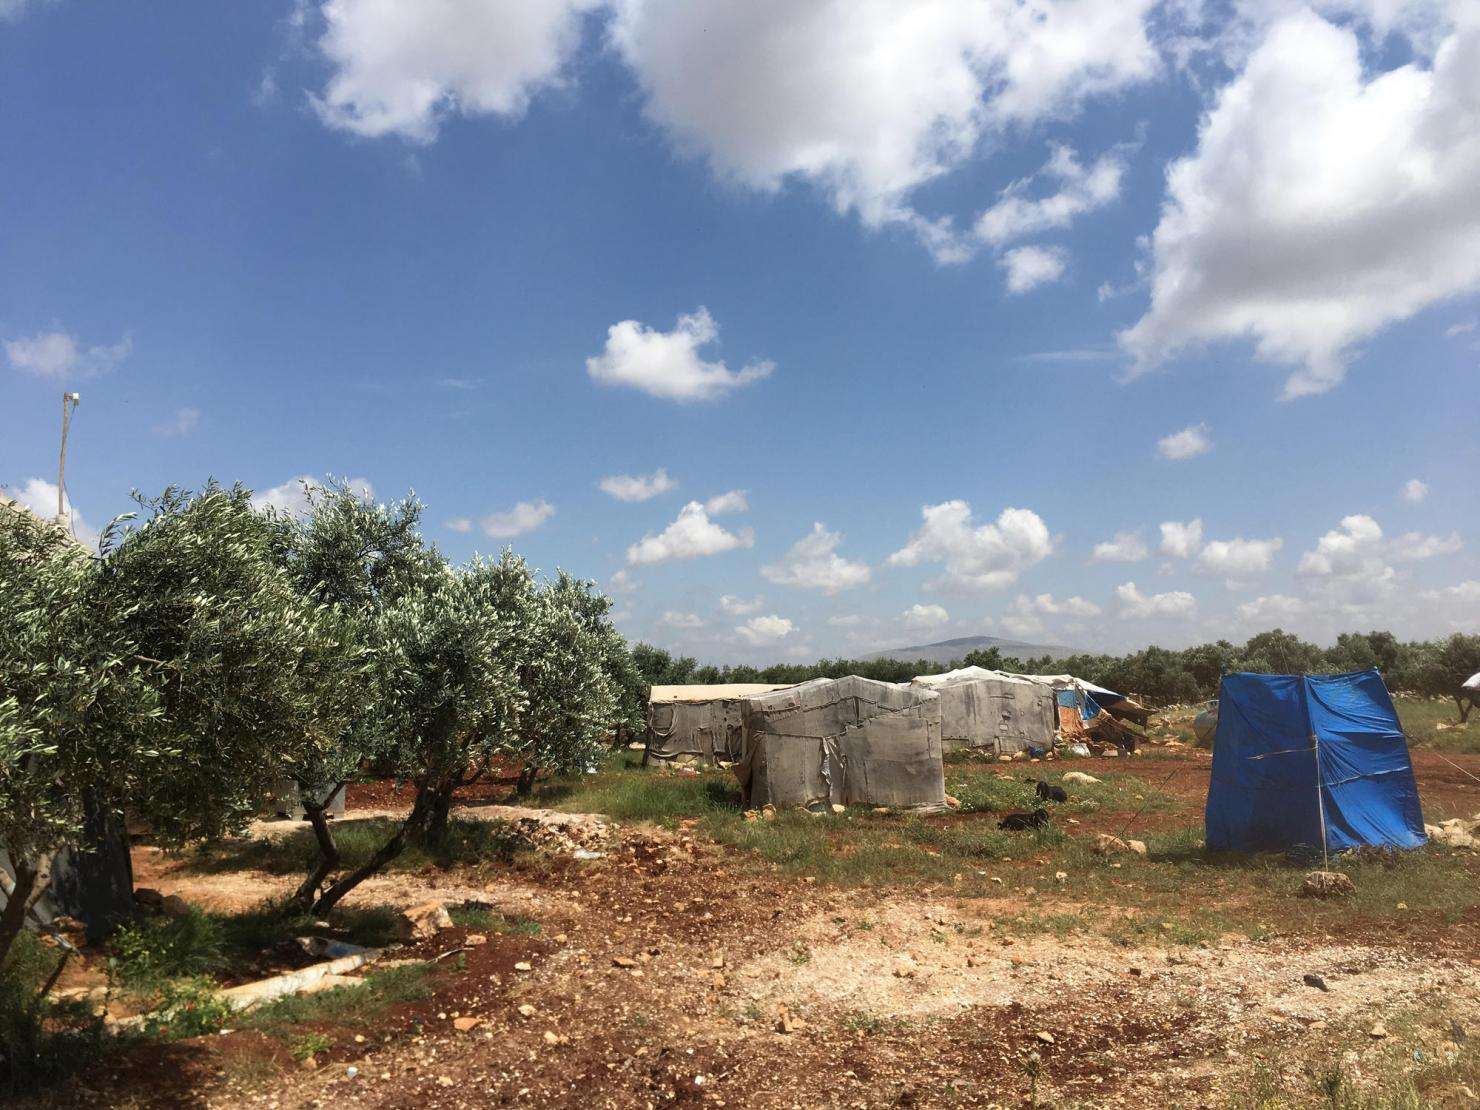 Idlib, a crowded IDP camp